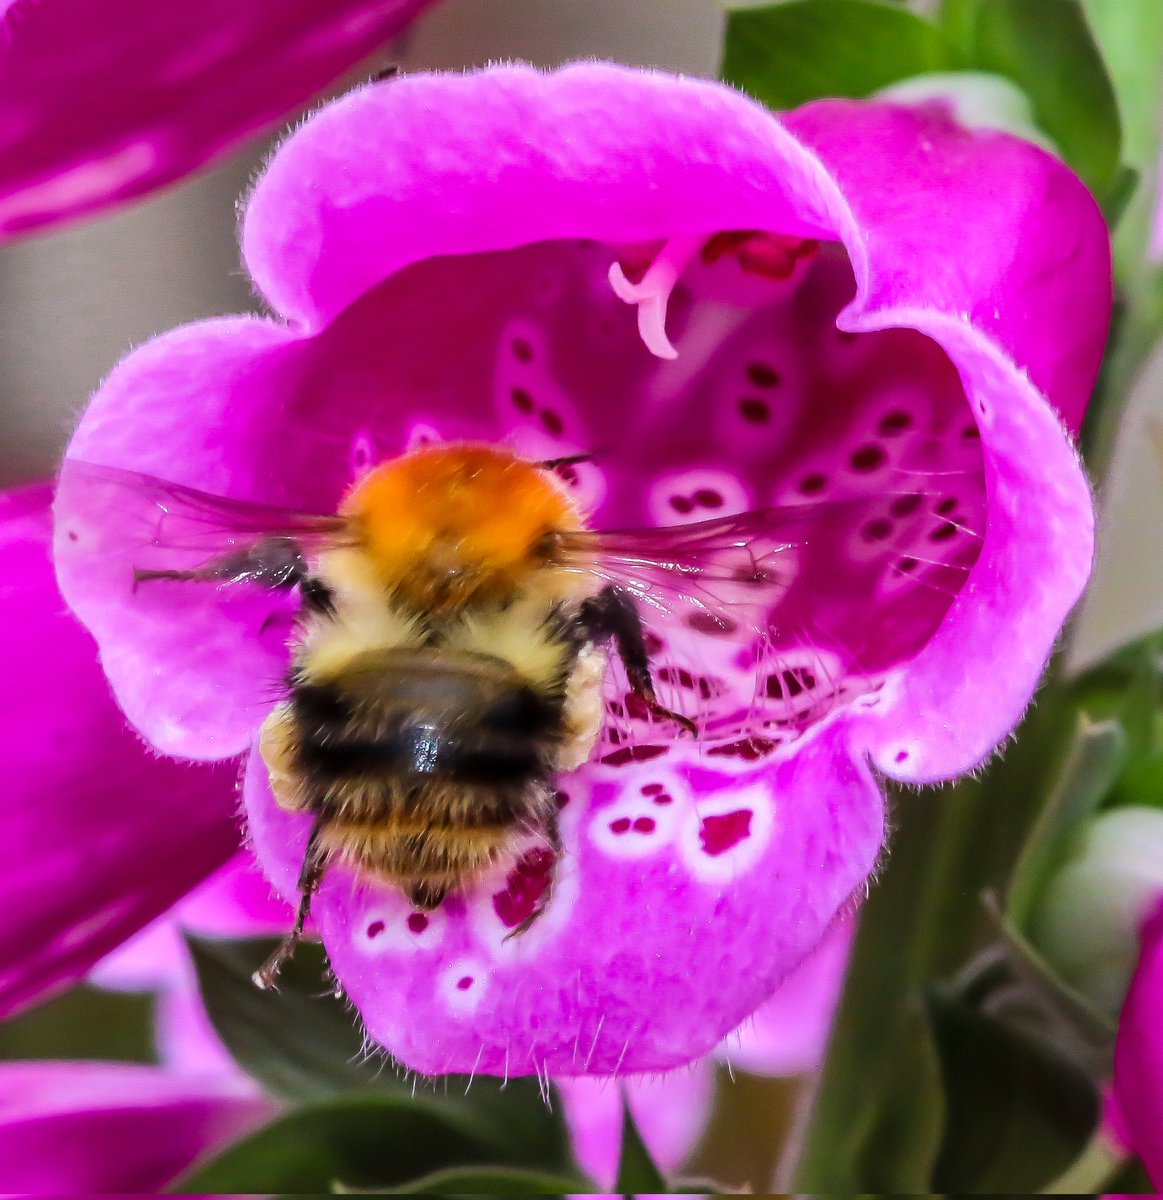 Ooh, I wonder what's inside here. 🥰
#saveourbees #NaturePhotography #wildlifephotography #TwitterNaturePhotography #TwitterNatureCommunity #bees #flowerpictures